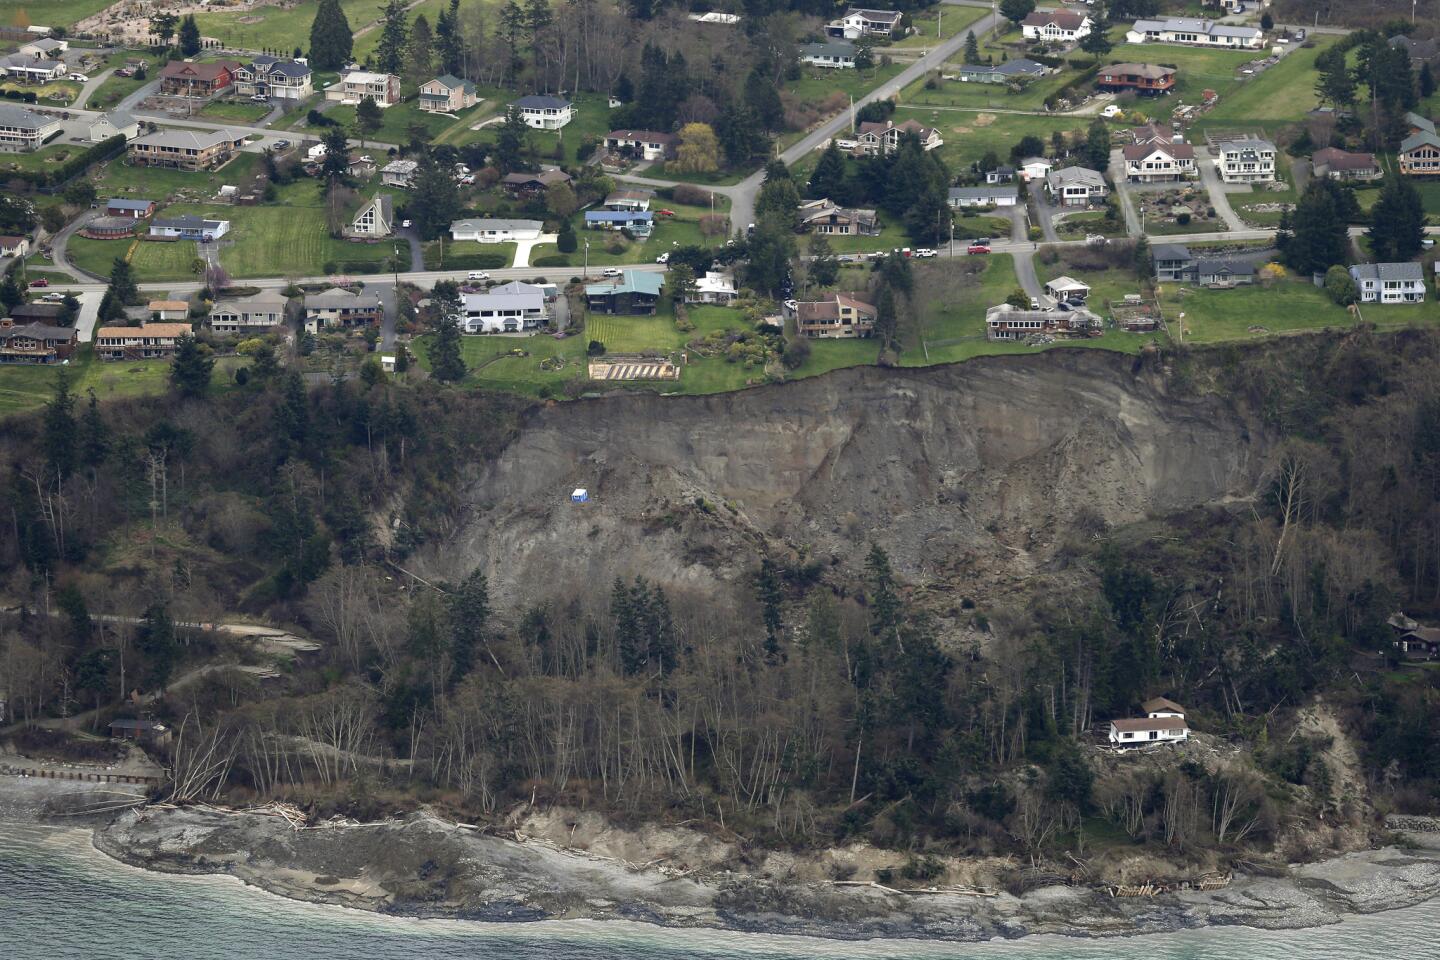 Whidbey Island landslide